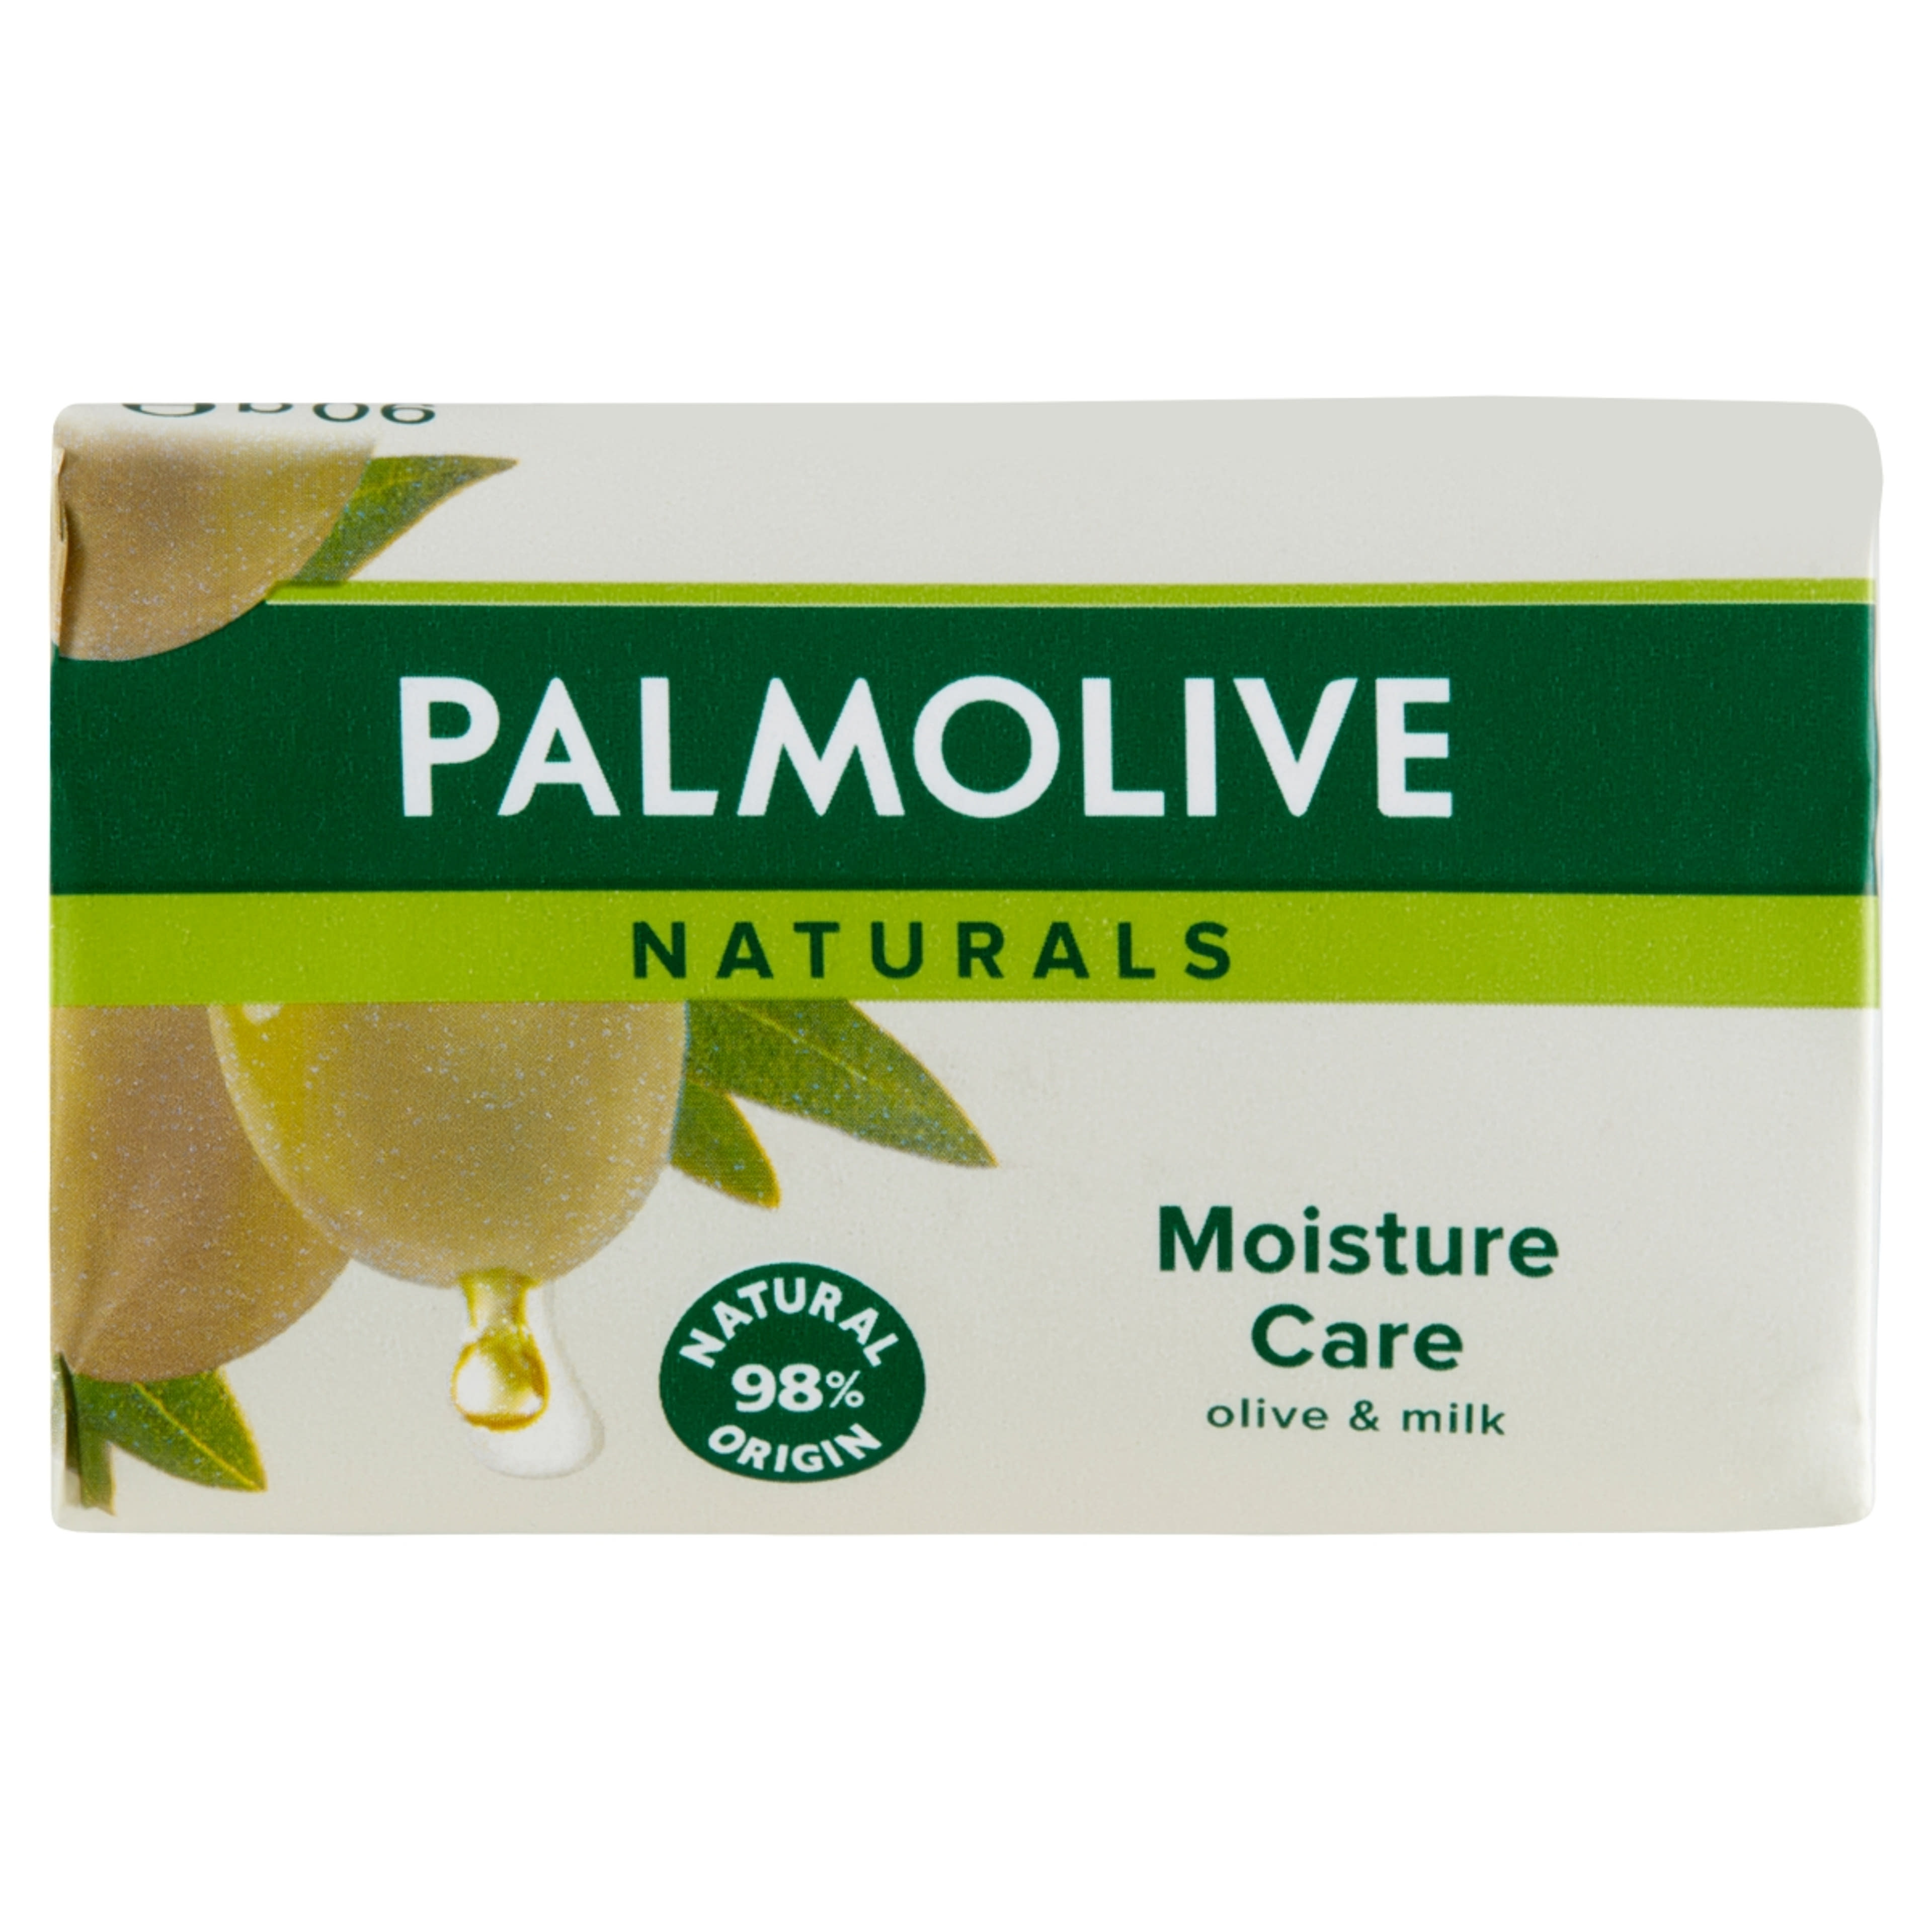 Palmolive Naturals Moisture Care pipereszappan - 90 g-1